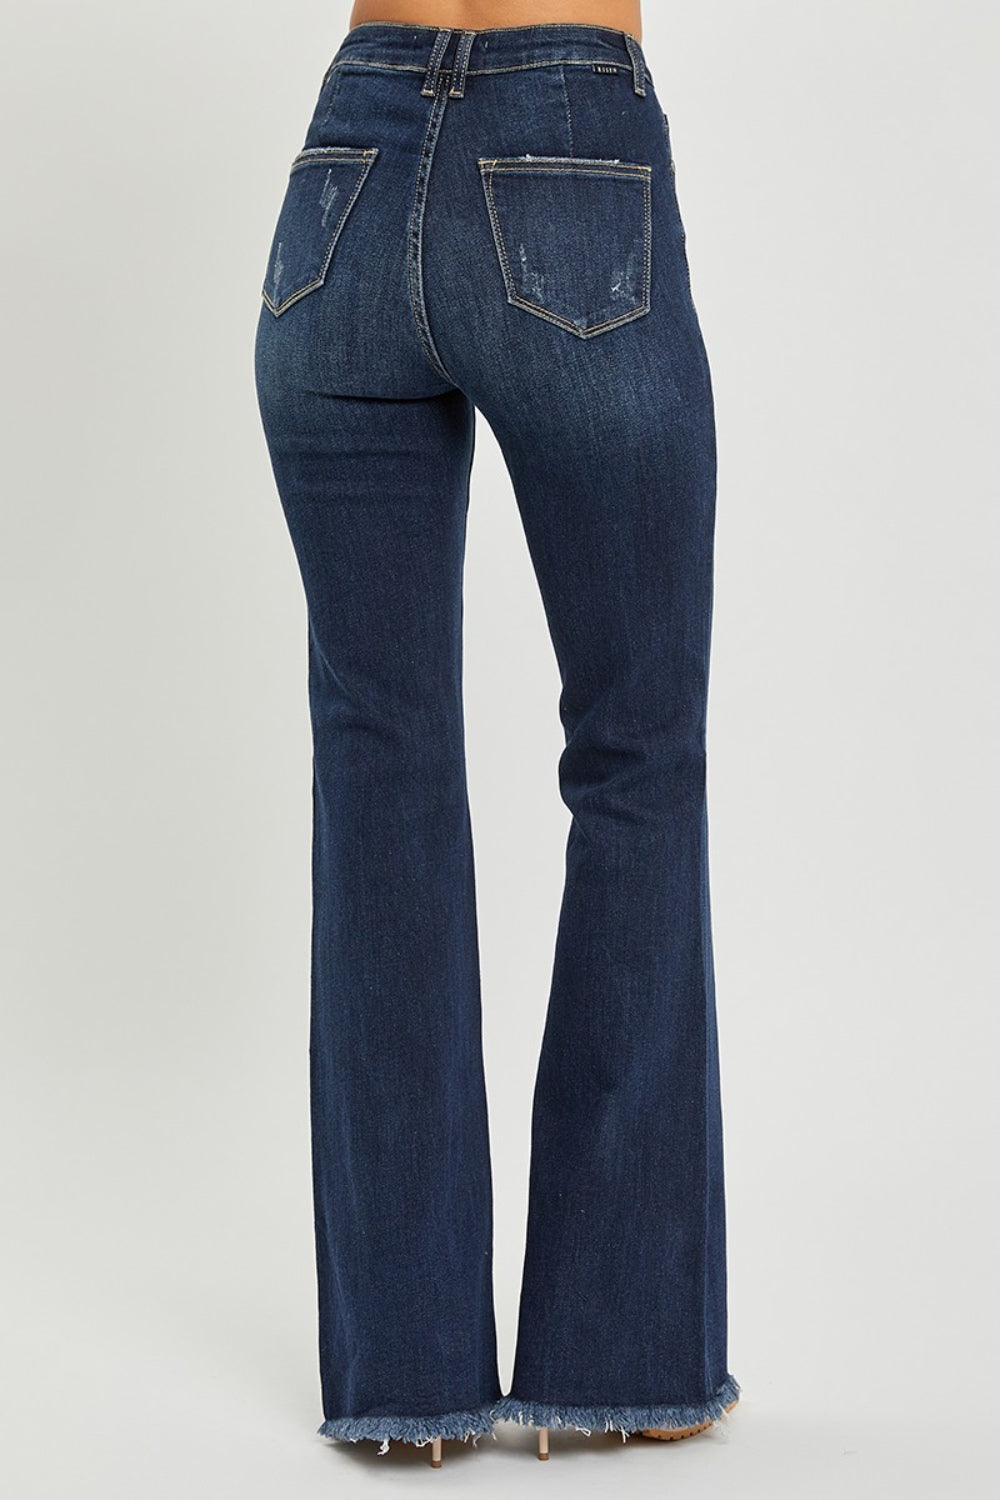 Risen Chic Elevation: Women's Wide Leg High Waist Raw Hem Flare Jeans